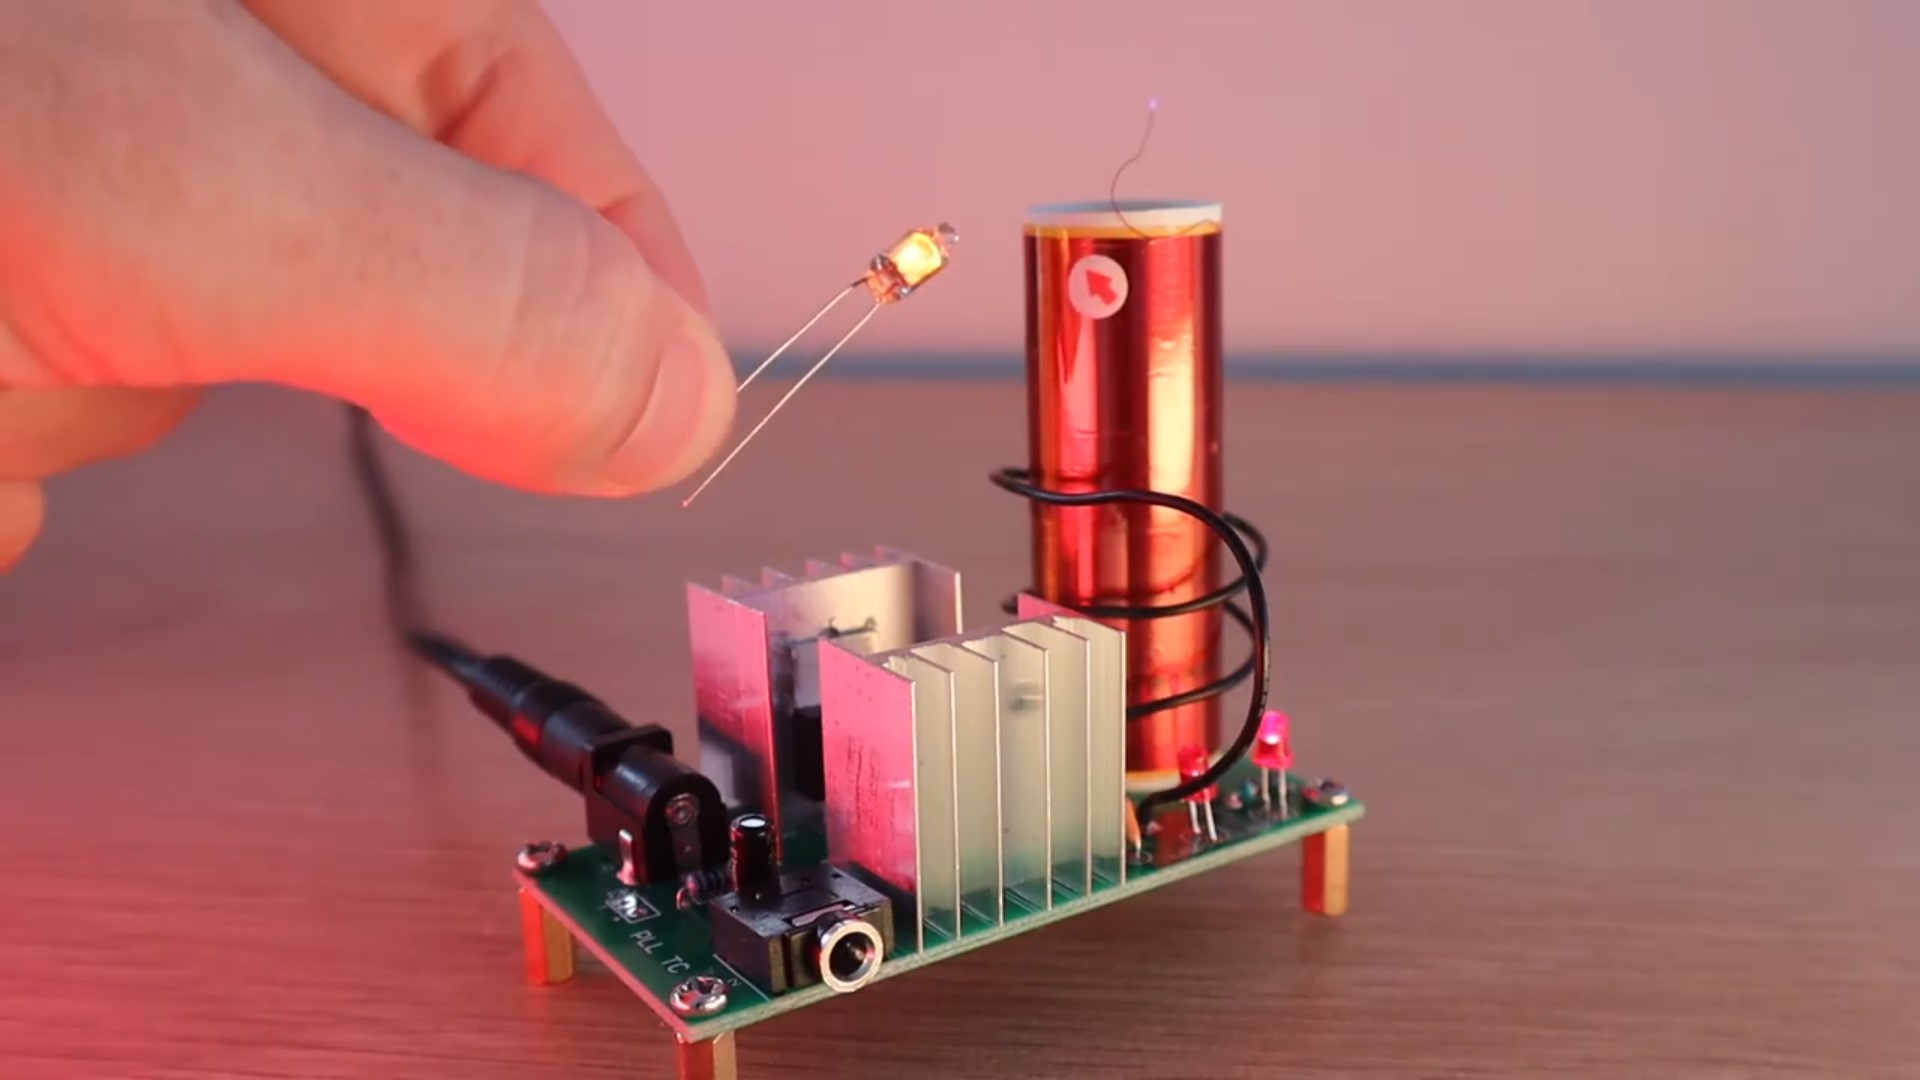 build a mini tesla coil